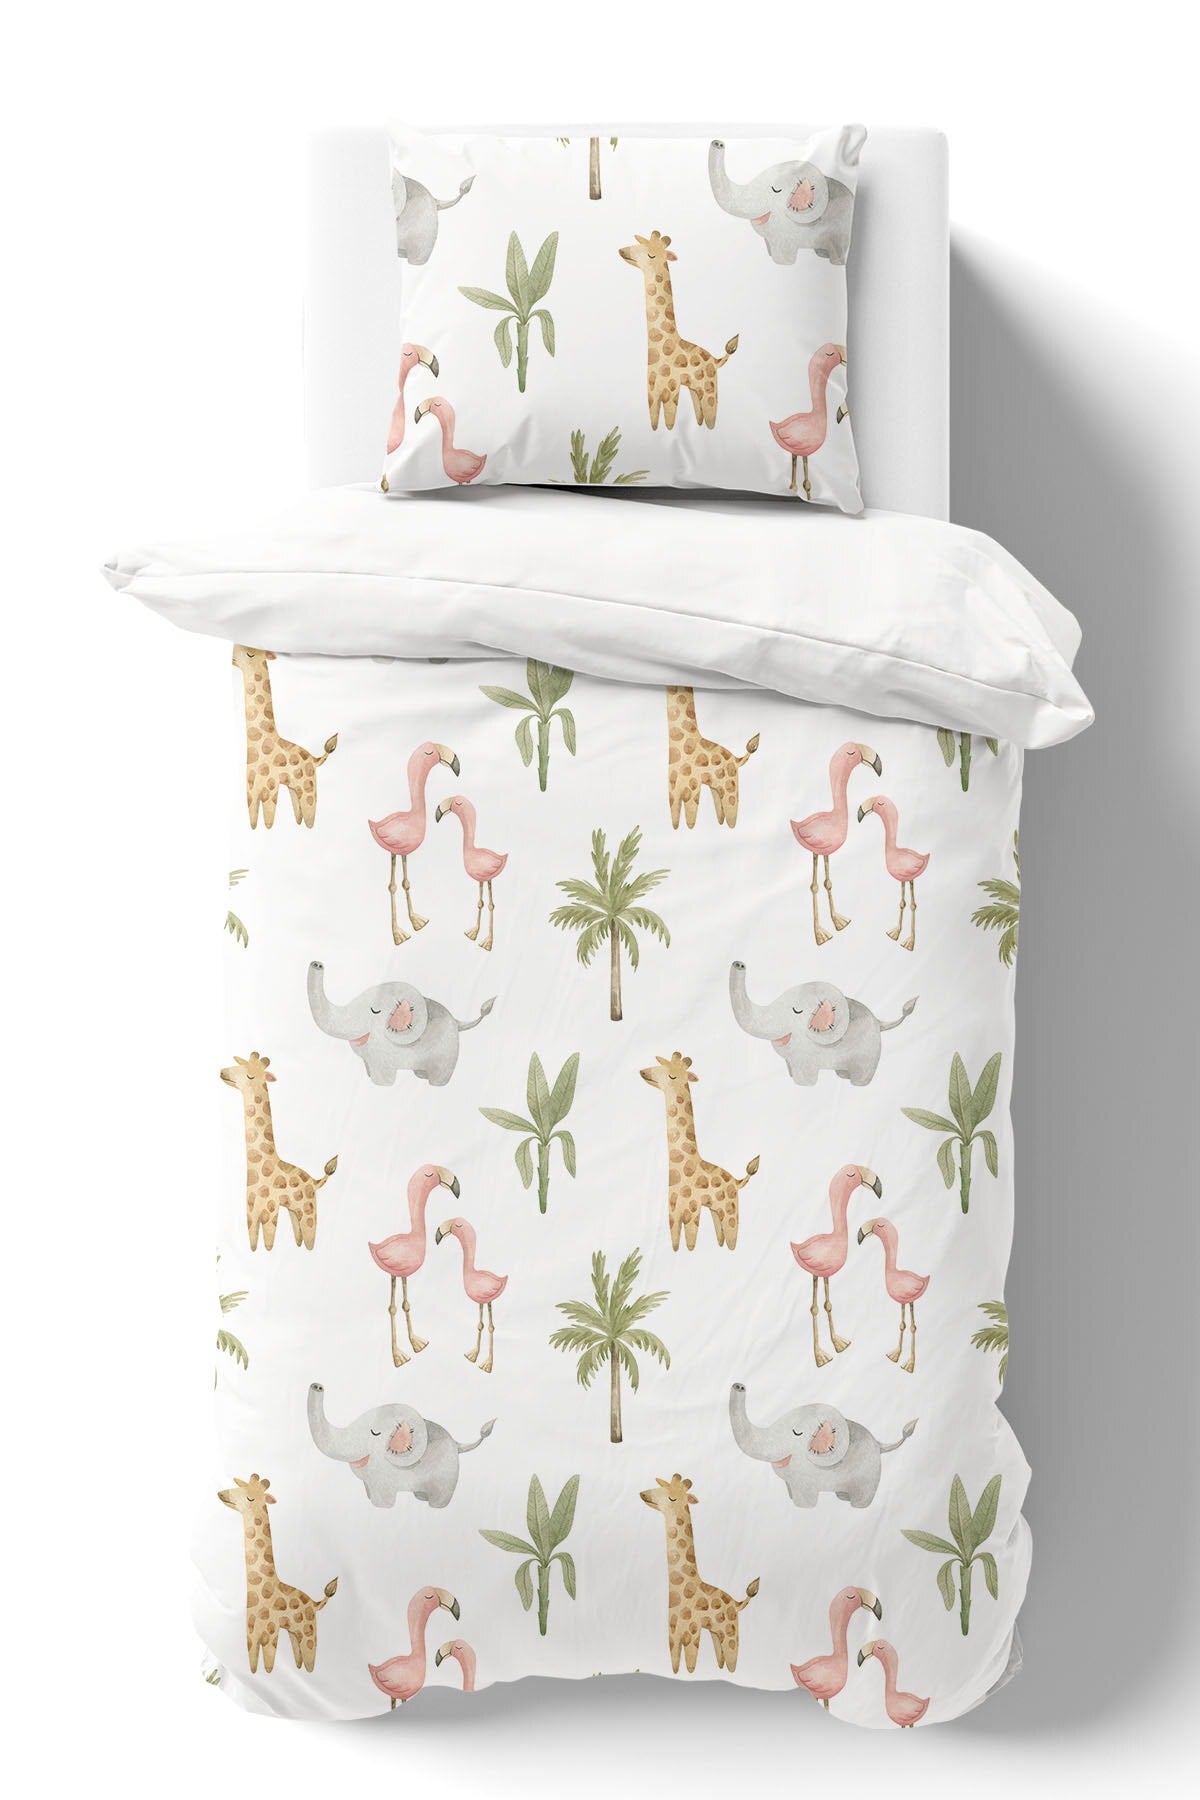 Organic Single Duvet Cover Set - Iconic Series - Pink Safari Animals